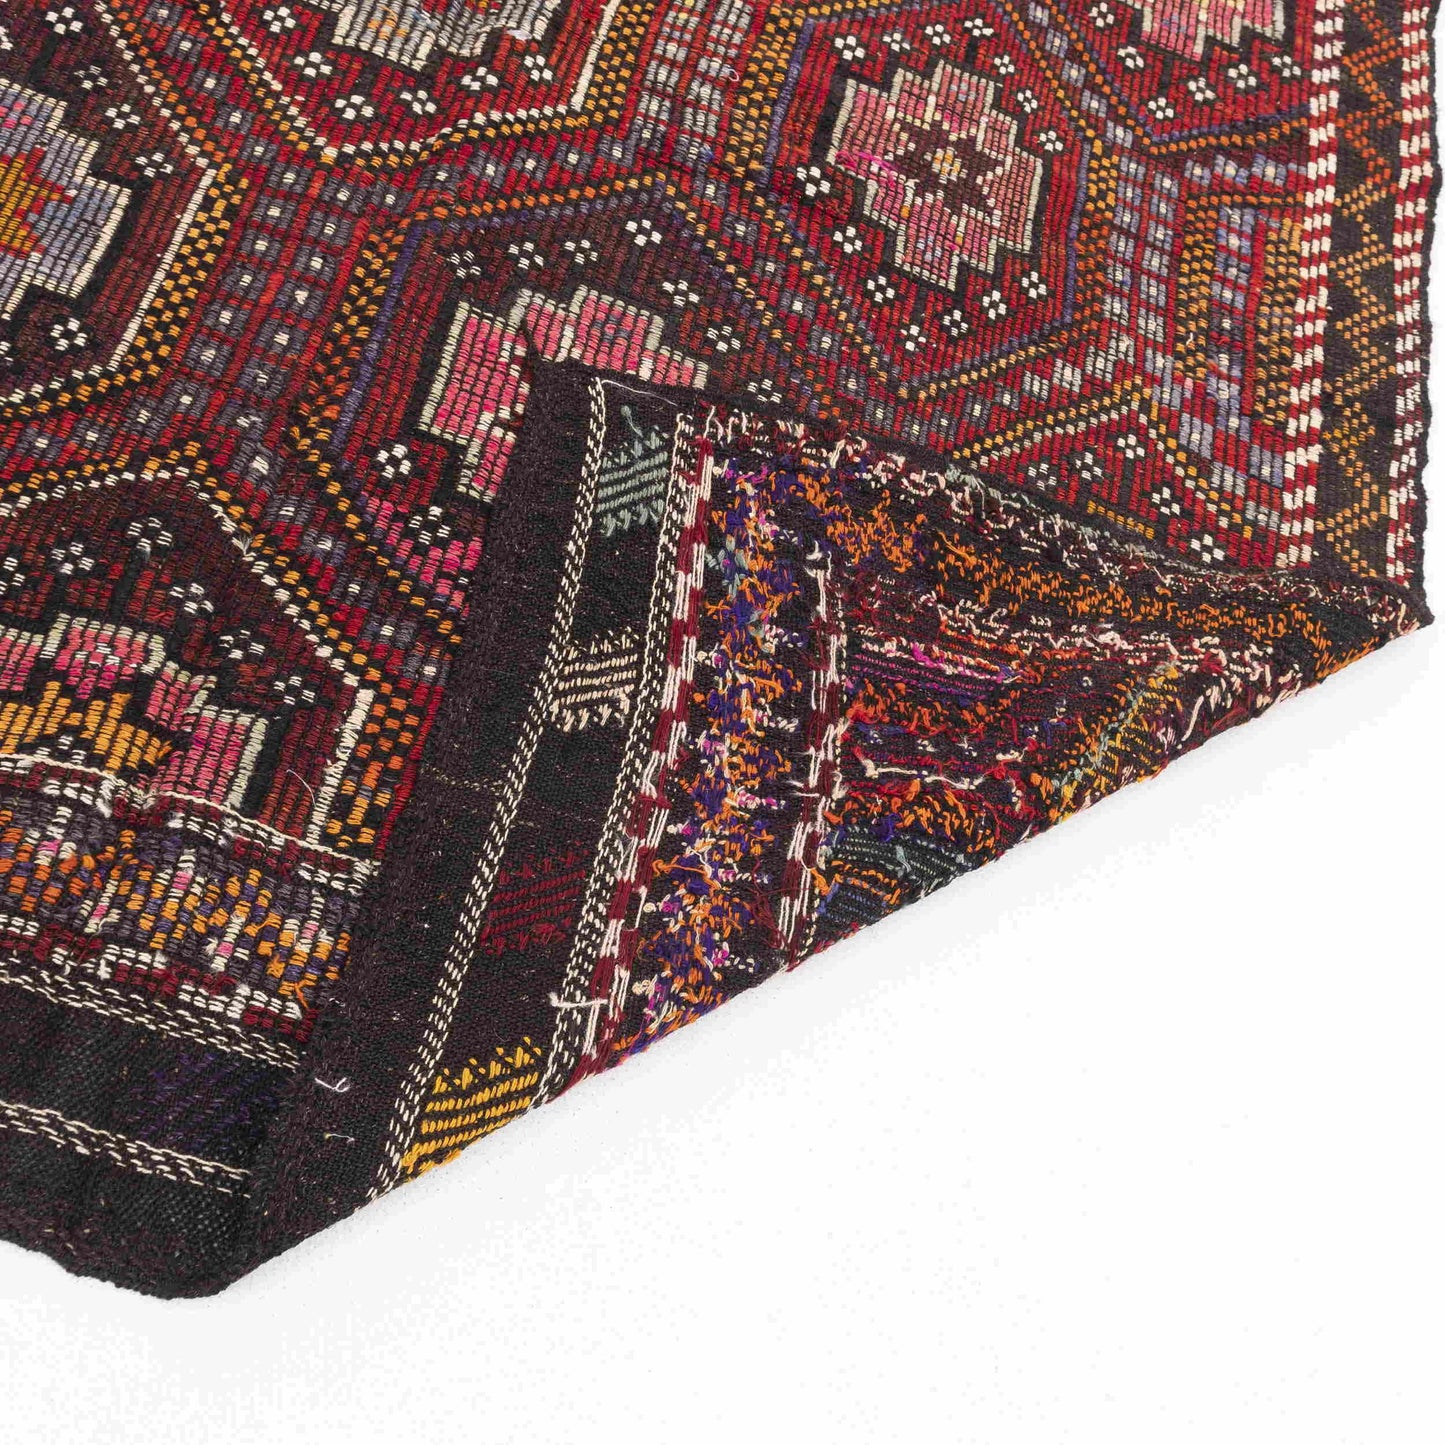 Oriental Kilim Cicim Handmade Wool On Wool 188 X 293 Cm - 6' 3'' X 9' 8'' ER12